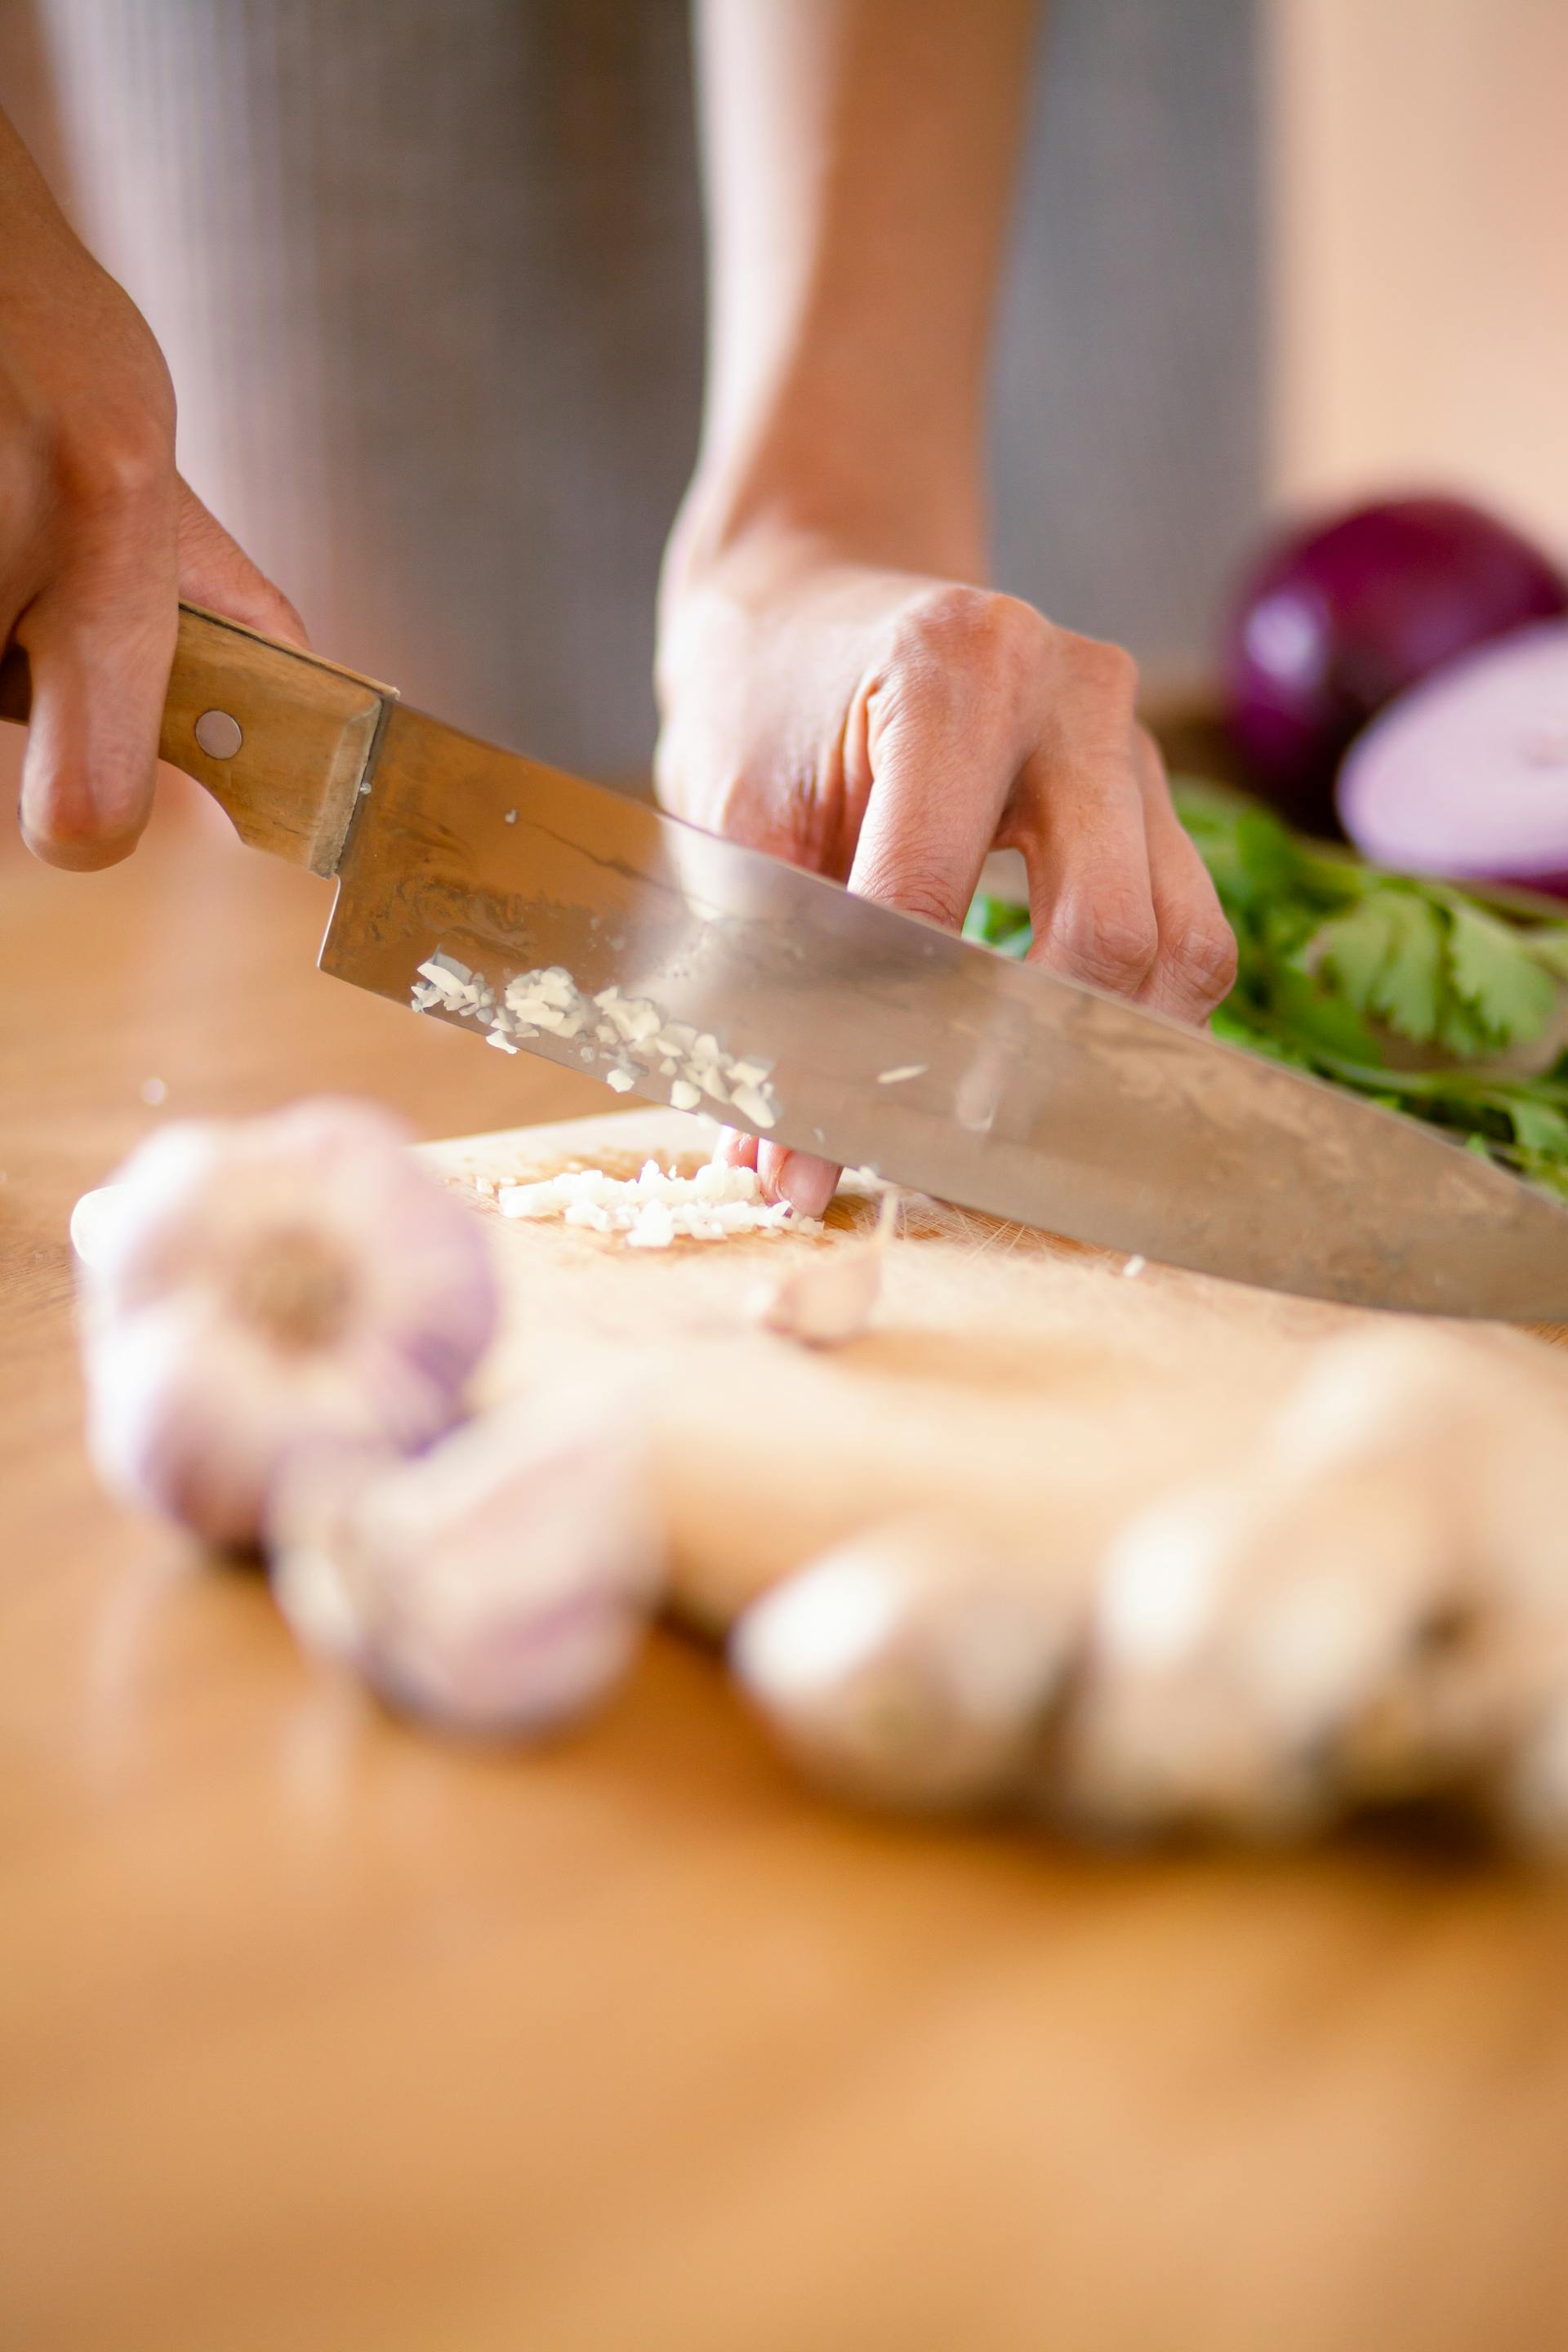 A person chopping garlic | Source: Pexels